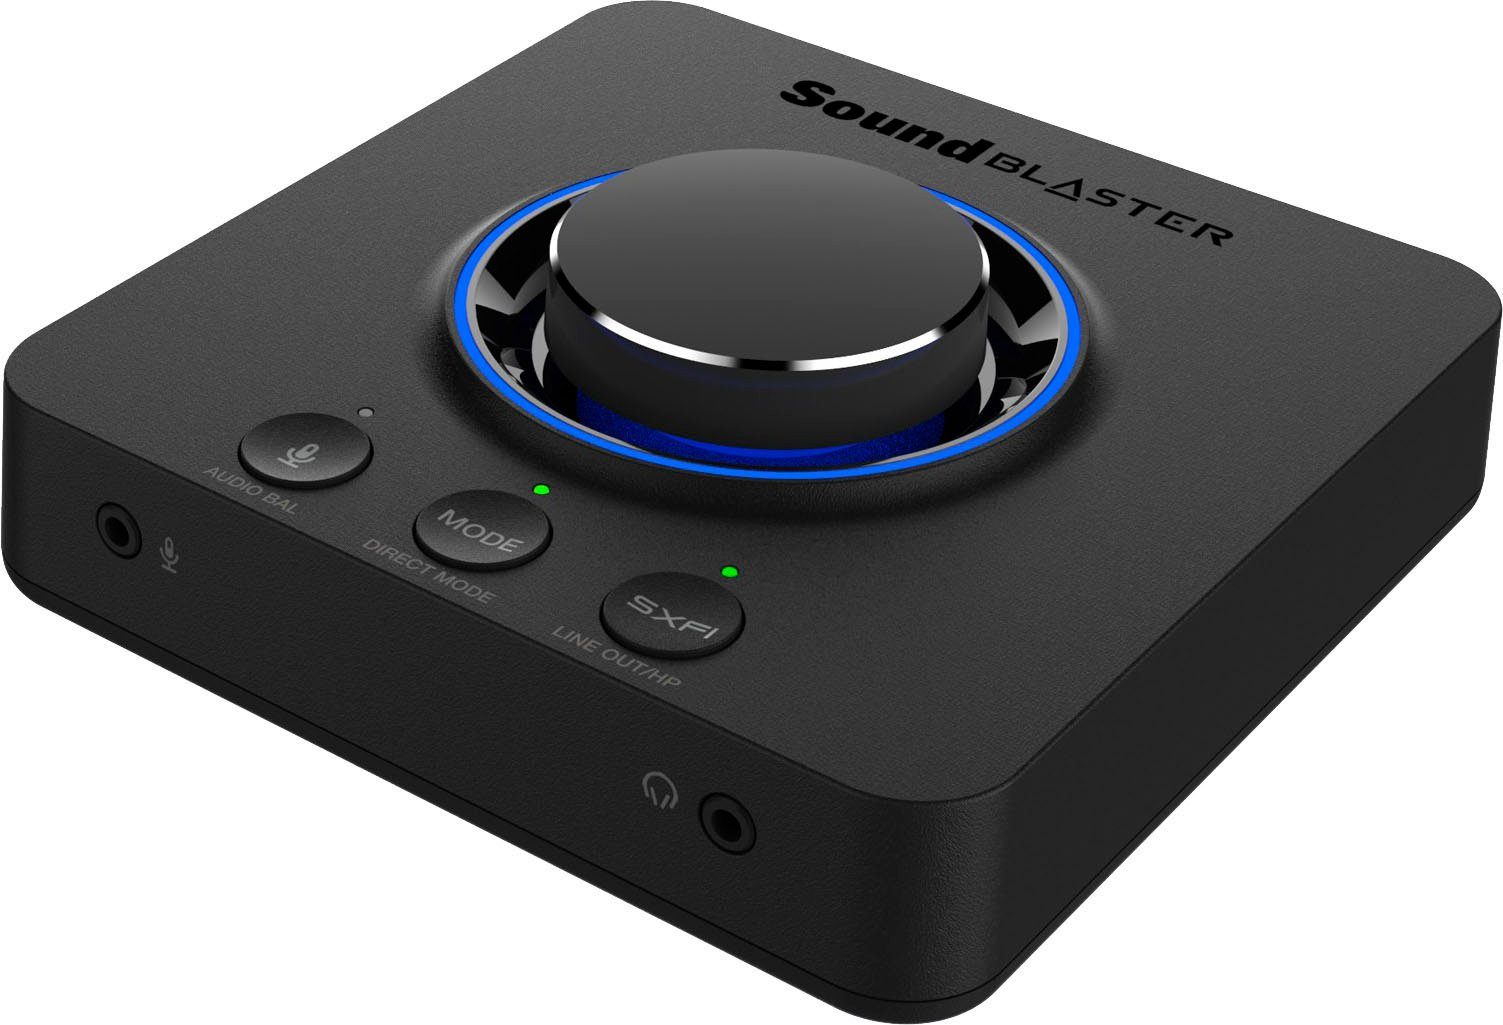 Soundkarte Sound Creative Super X3 Blaster X-Fi mit HD-USB-DAC-Verstärker-Soundkarte